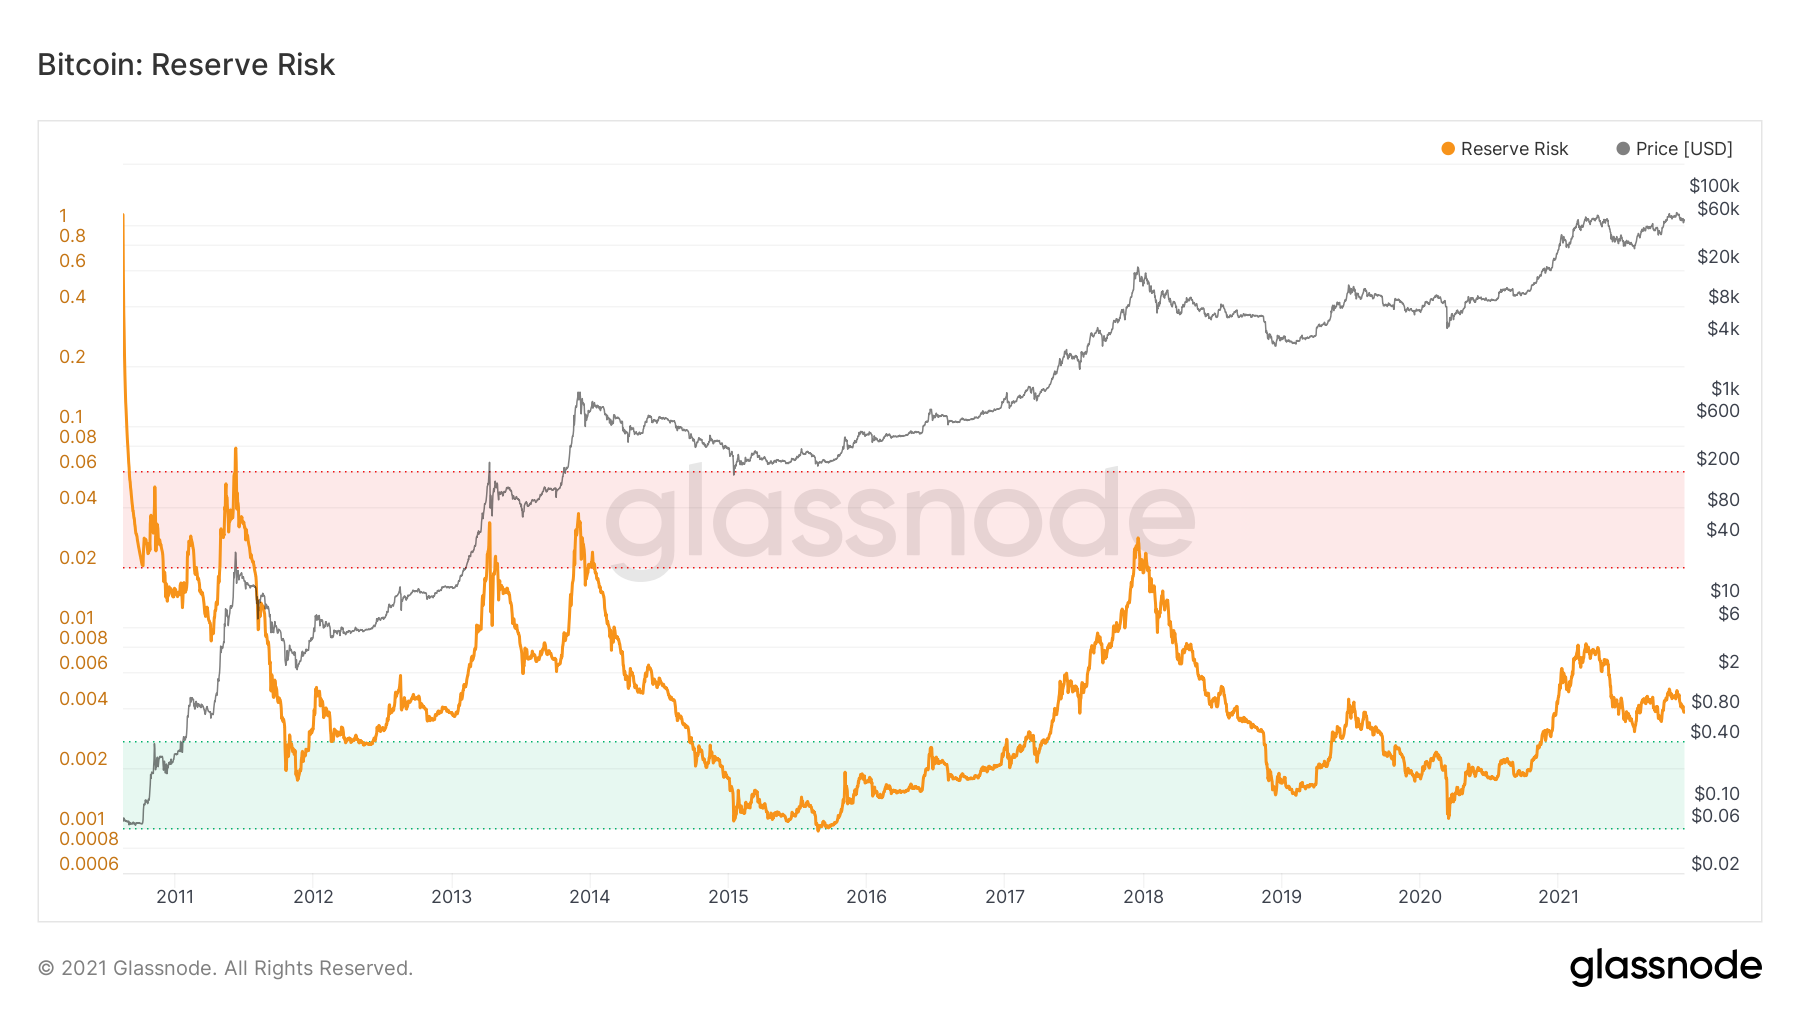 Bitcoin Reserve Risk by Glassnode